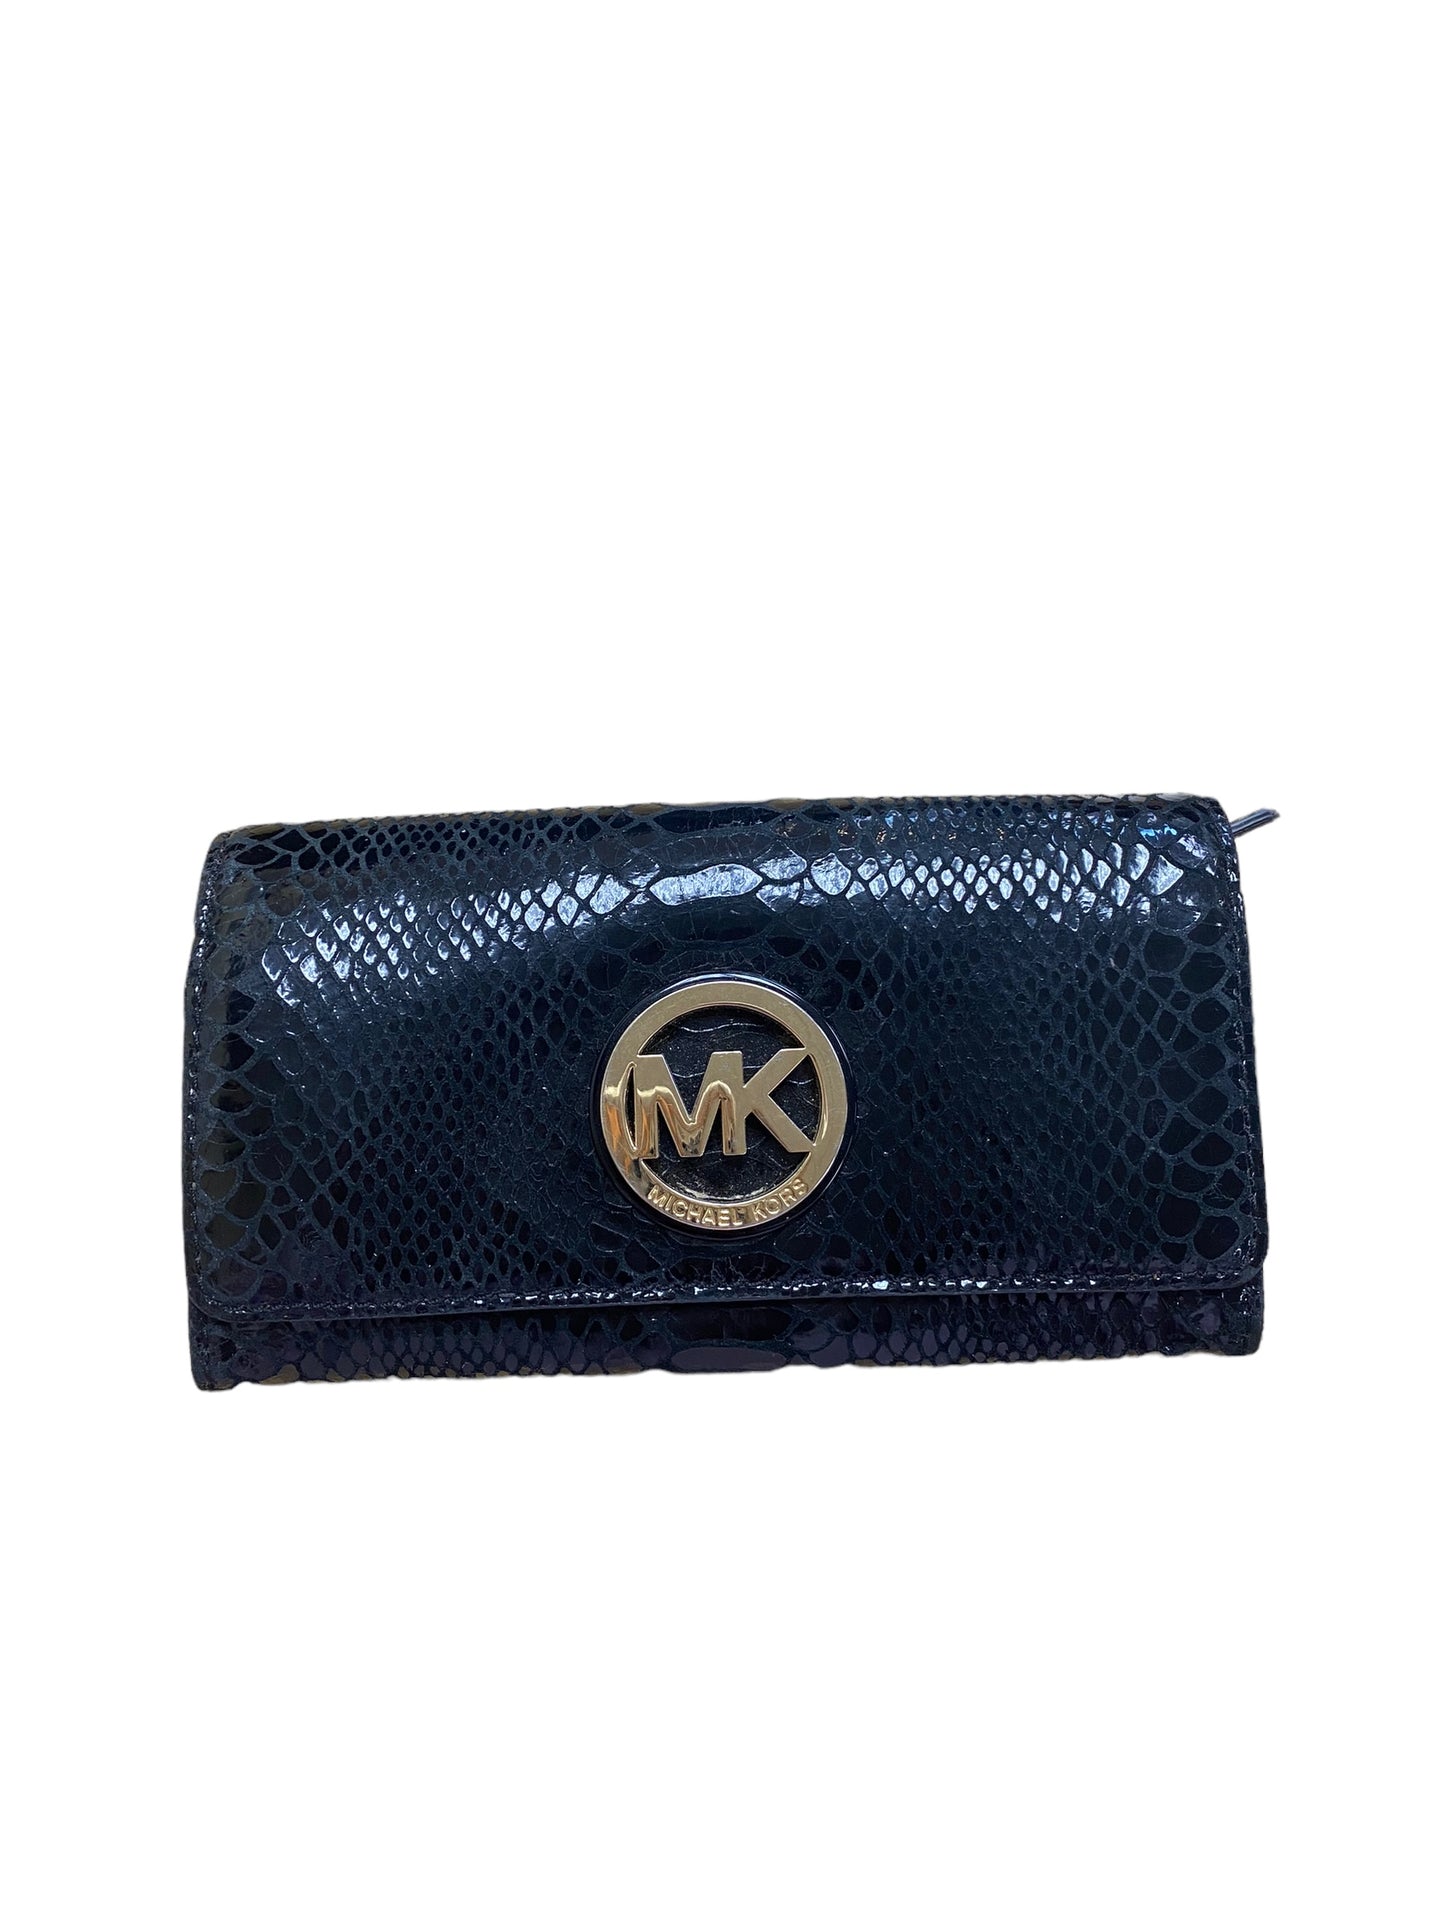 Wallet Designer By Michael By Michael Kors  Size: Medium